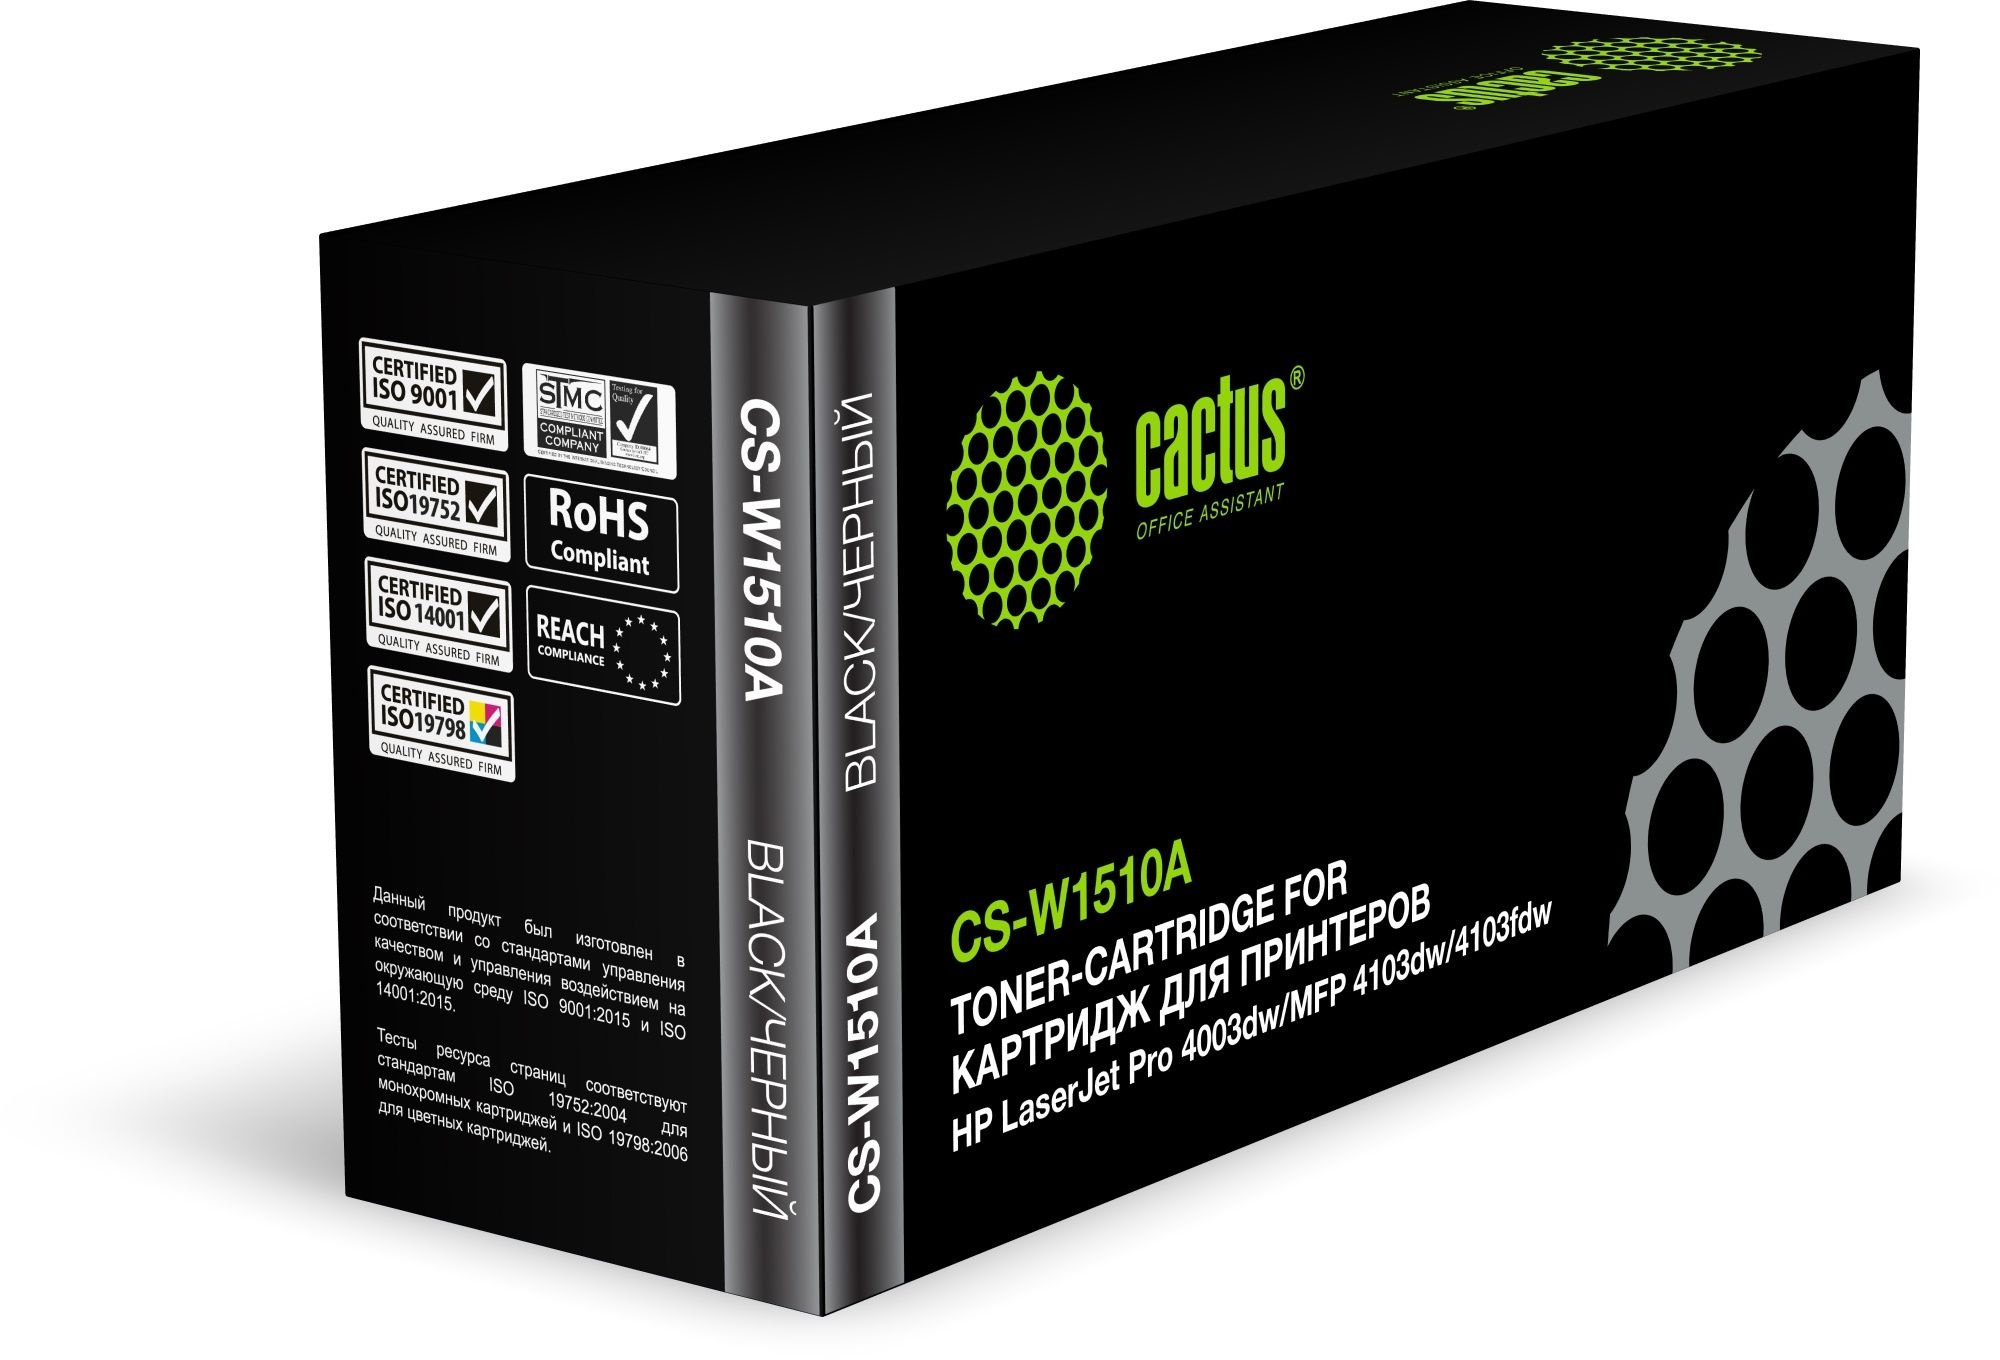 Картридж лазерный Cactus CS-W1510A (151A/W1510A), черный, 3050 страниц, совместимый для LJ Pro 4003dw/LJ MFP 4103dw/LJ 4103fdw